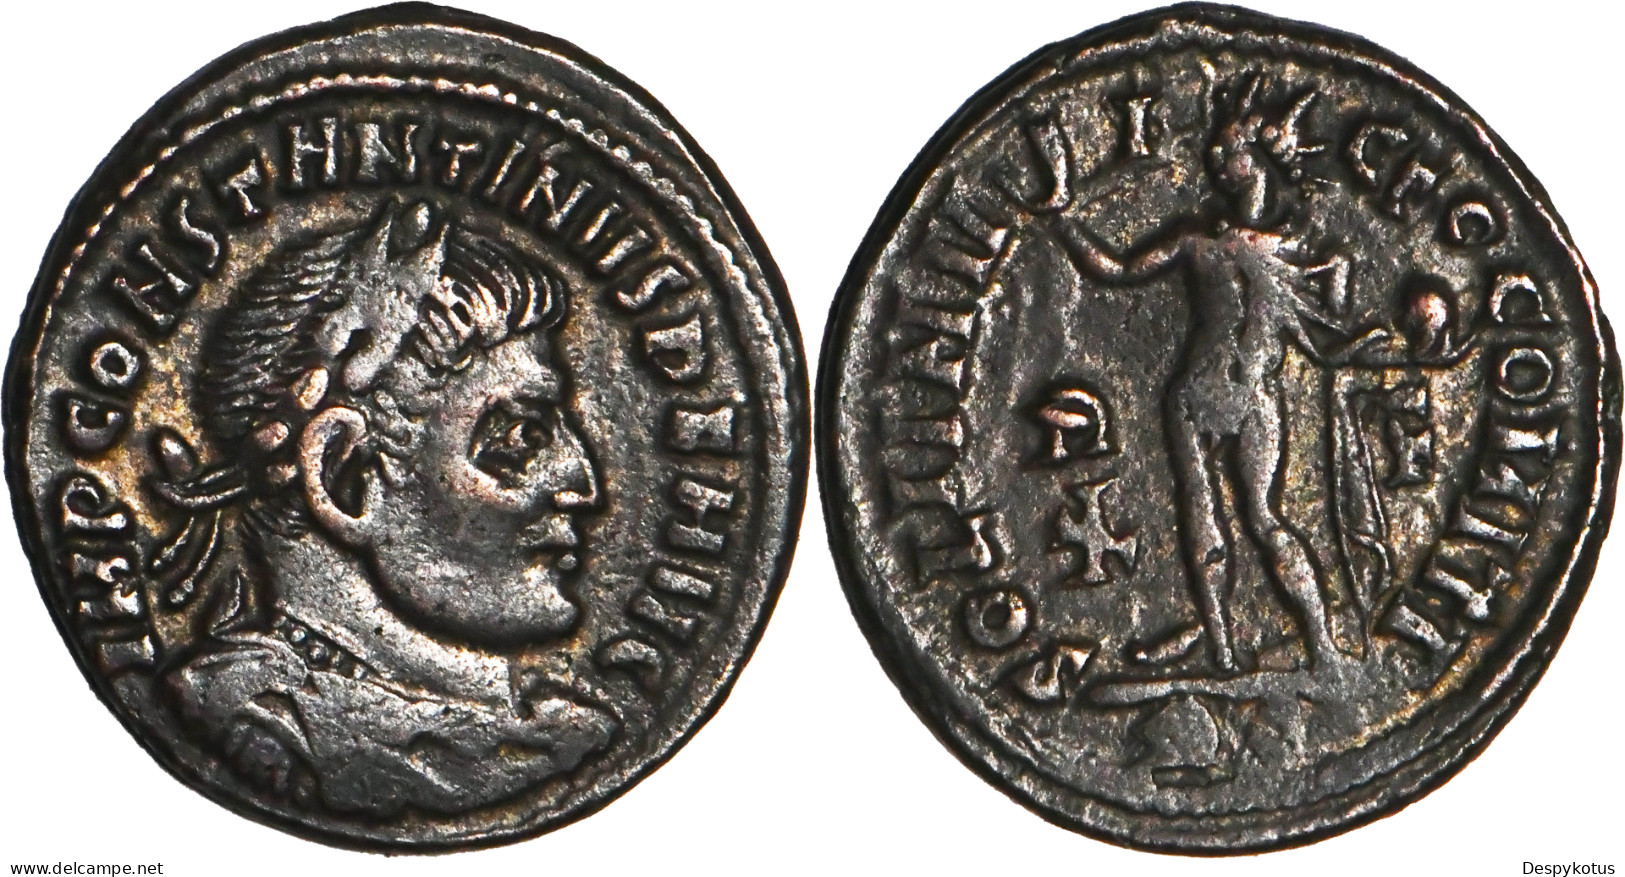 ROME - Centenionalis - CONSTANTIN I - SOLI INVICTO - ROME (RP) - 317 AD - RIC.27 - 19-142 - Der Christlischen Kaiser (307 / 363)